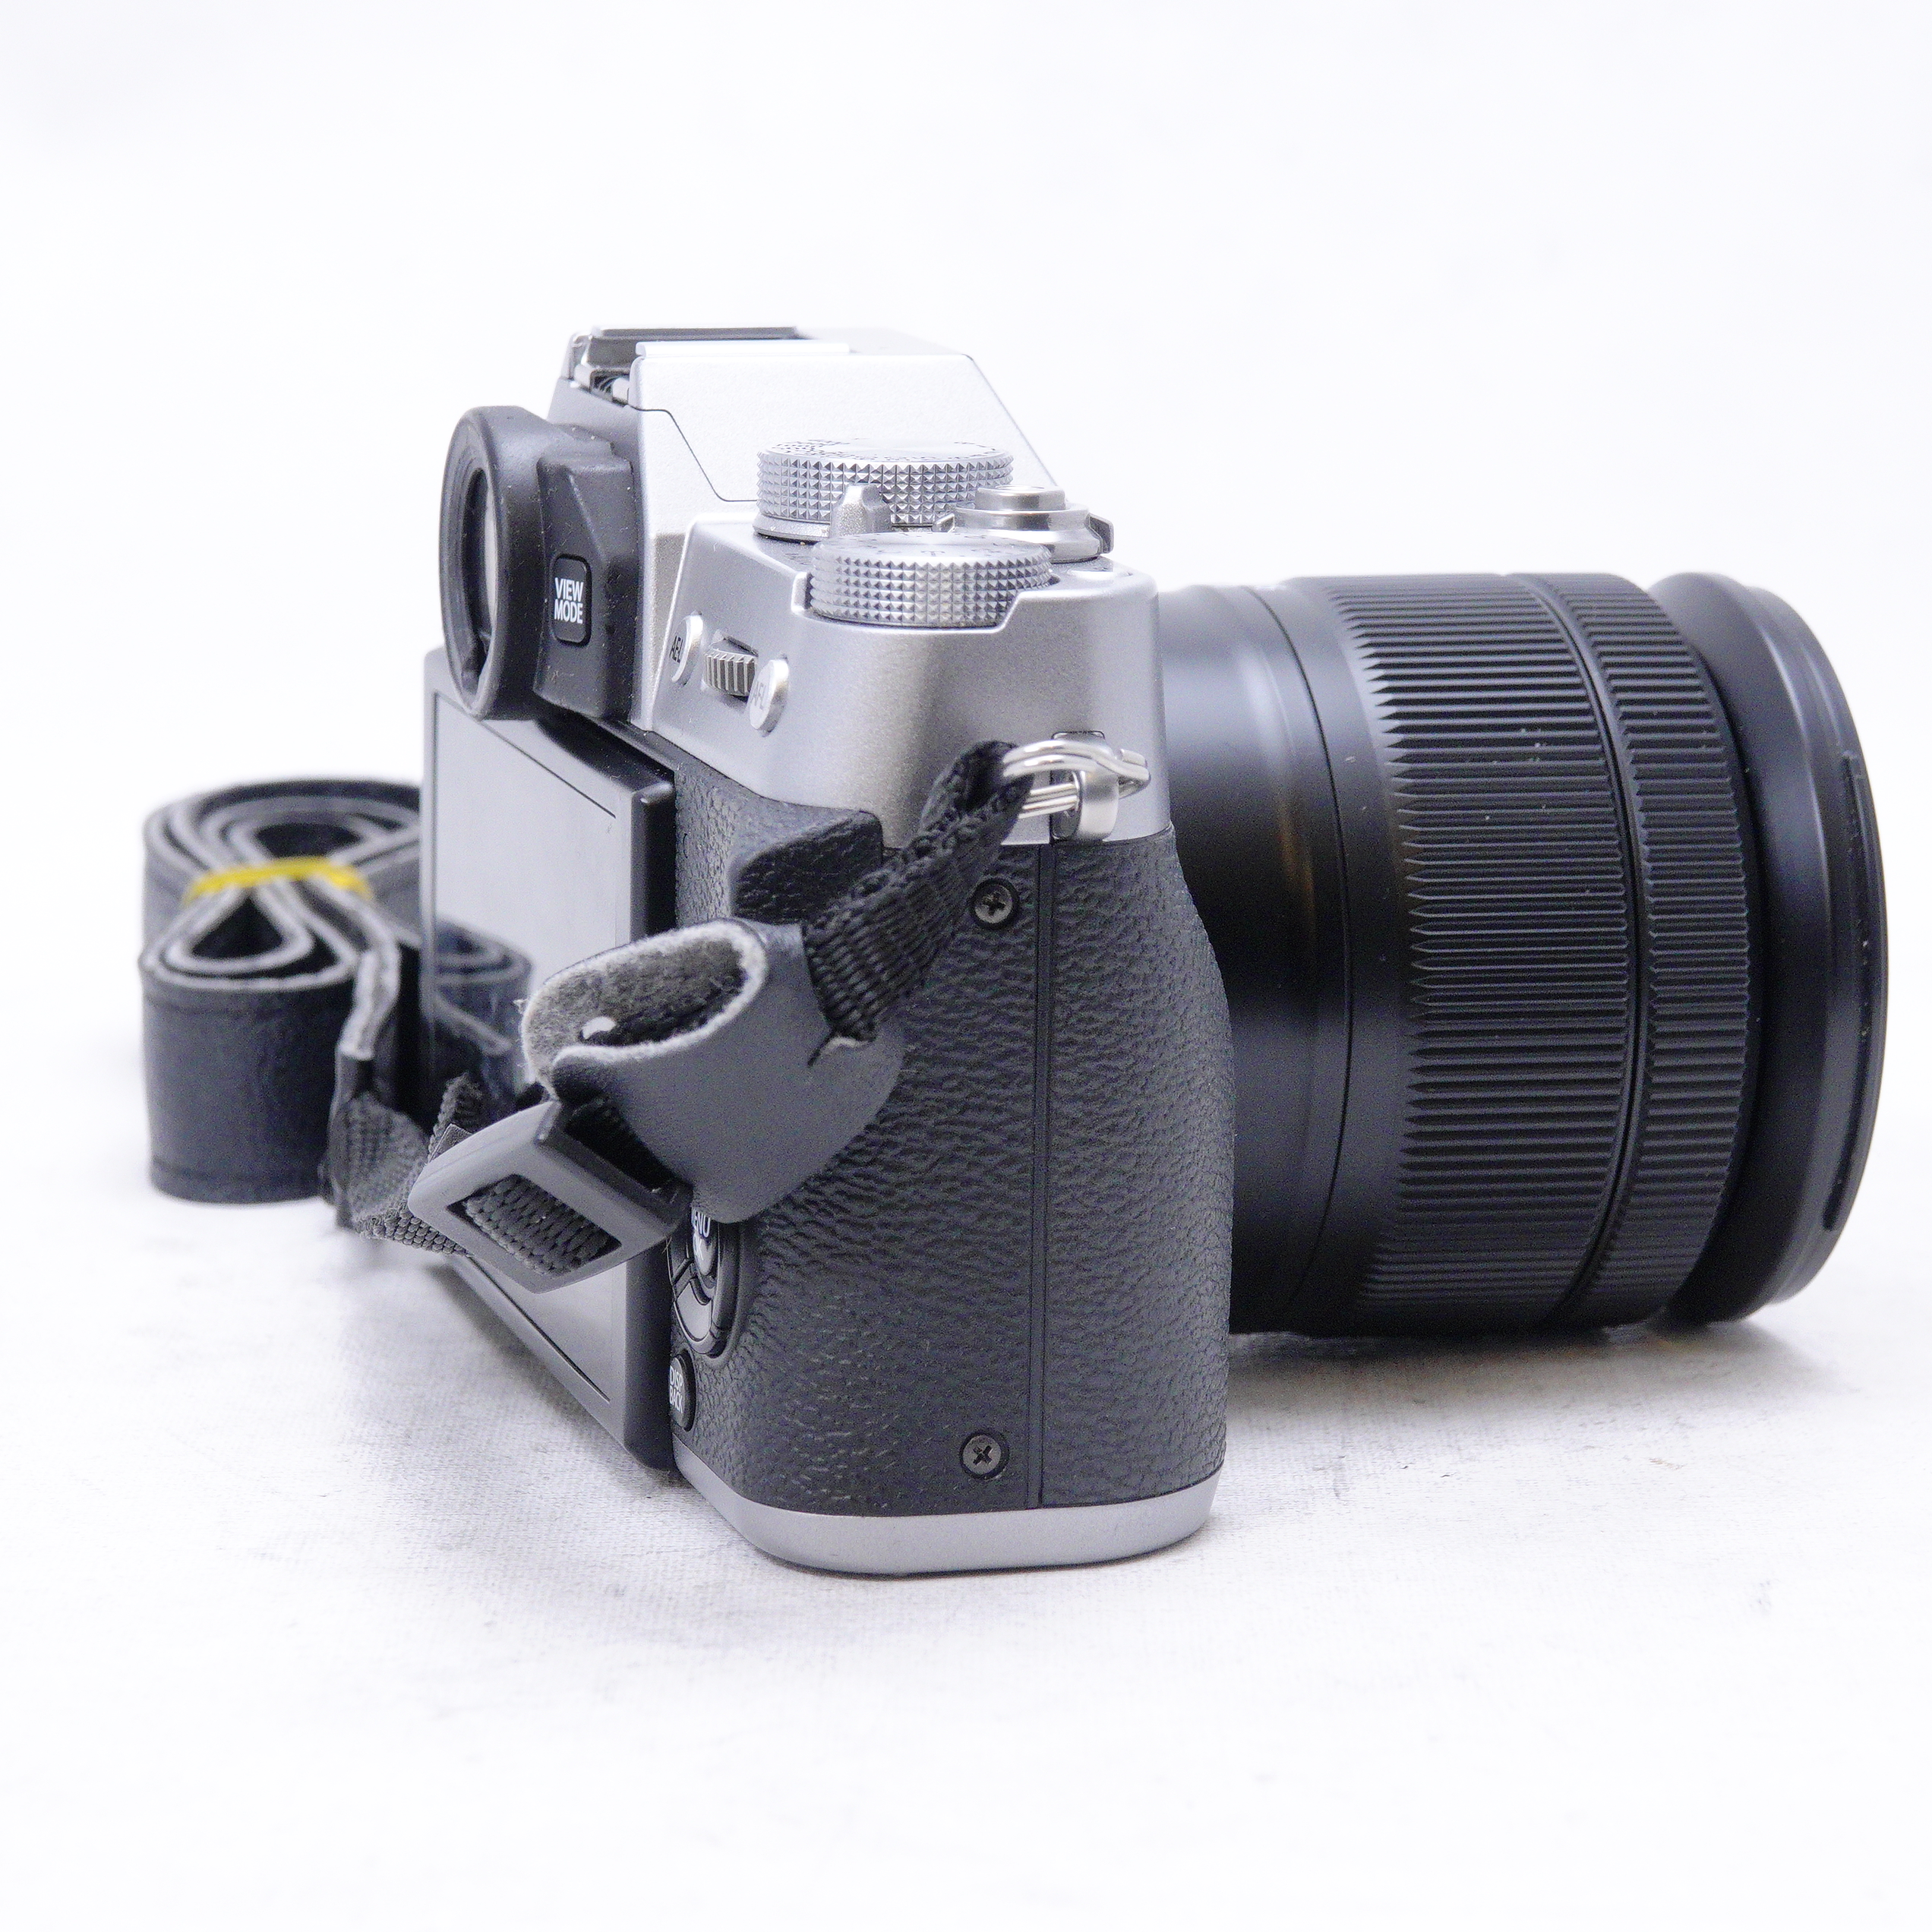 Fujifilm XT20 con Fujinon XC 16-50mm - Usado